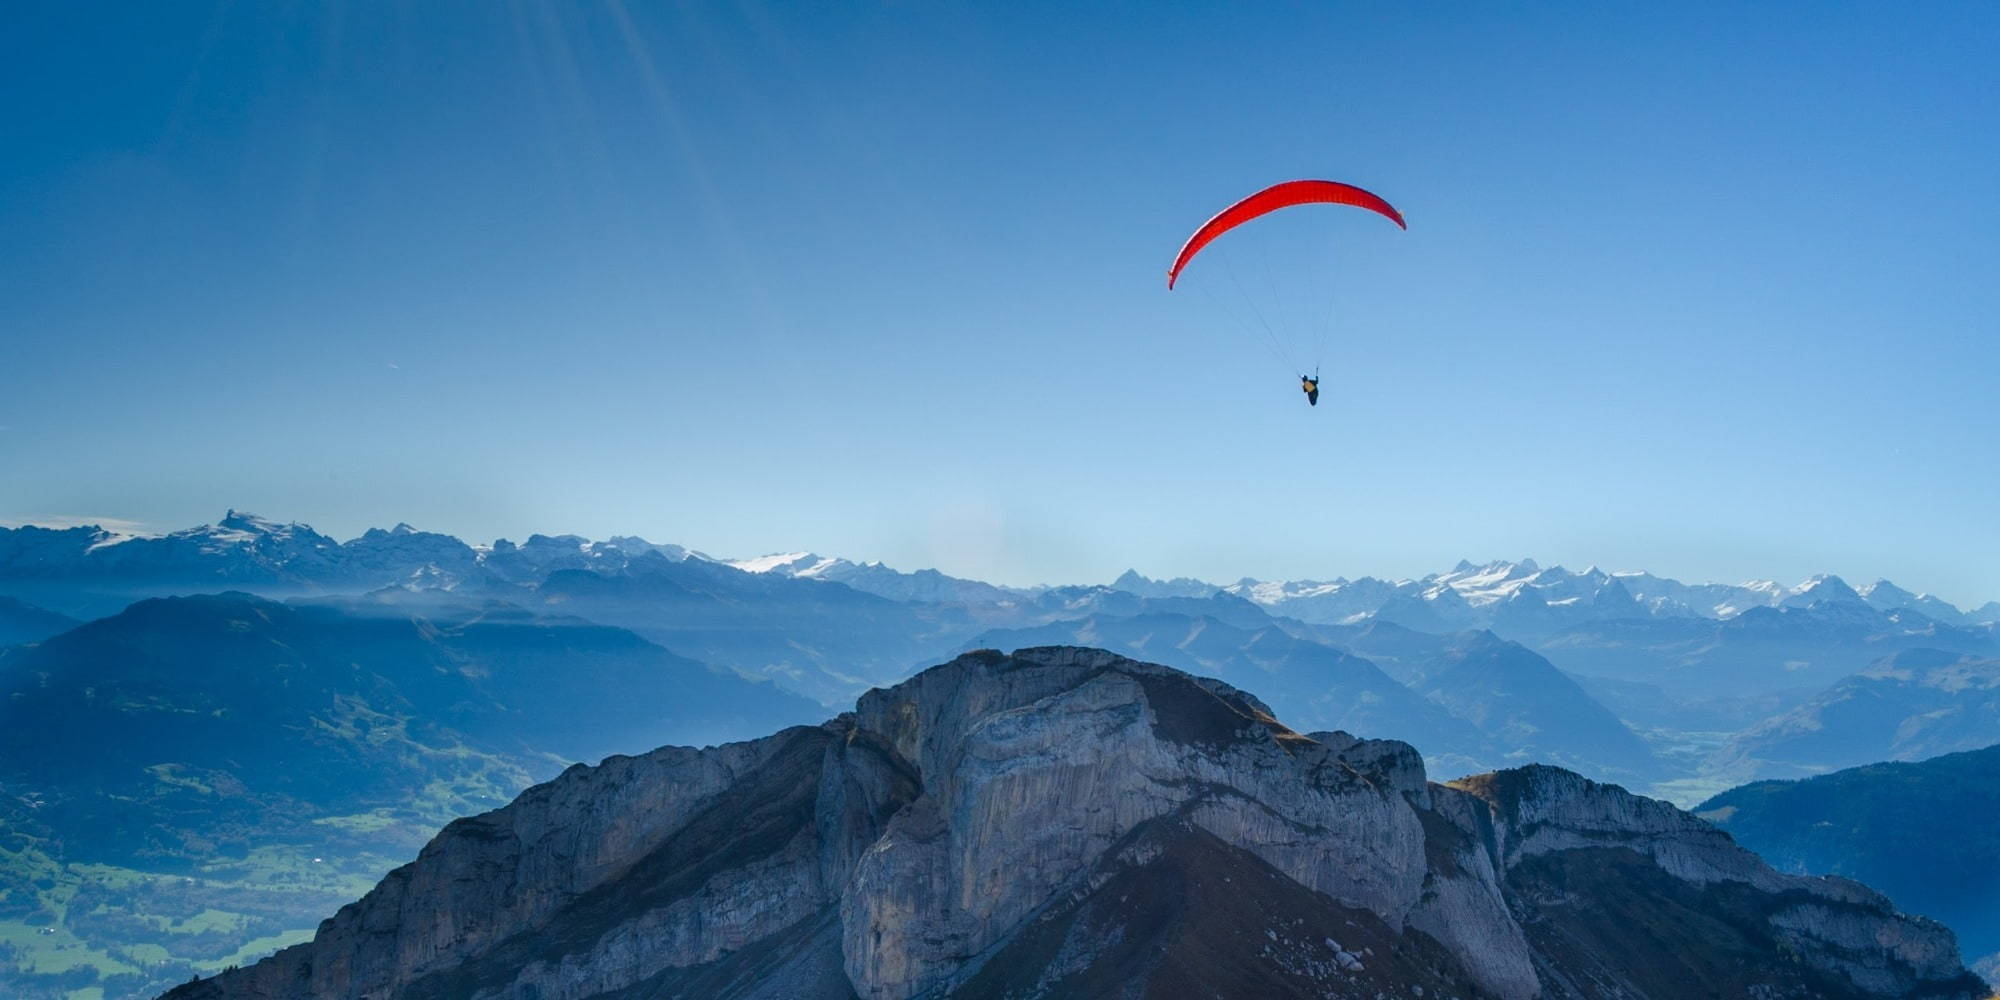 Flying high in your career in Switzerland